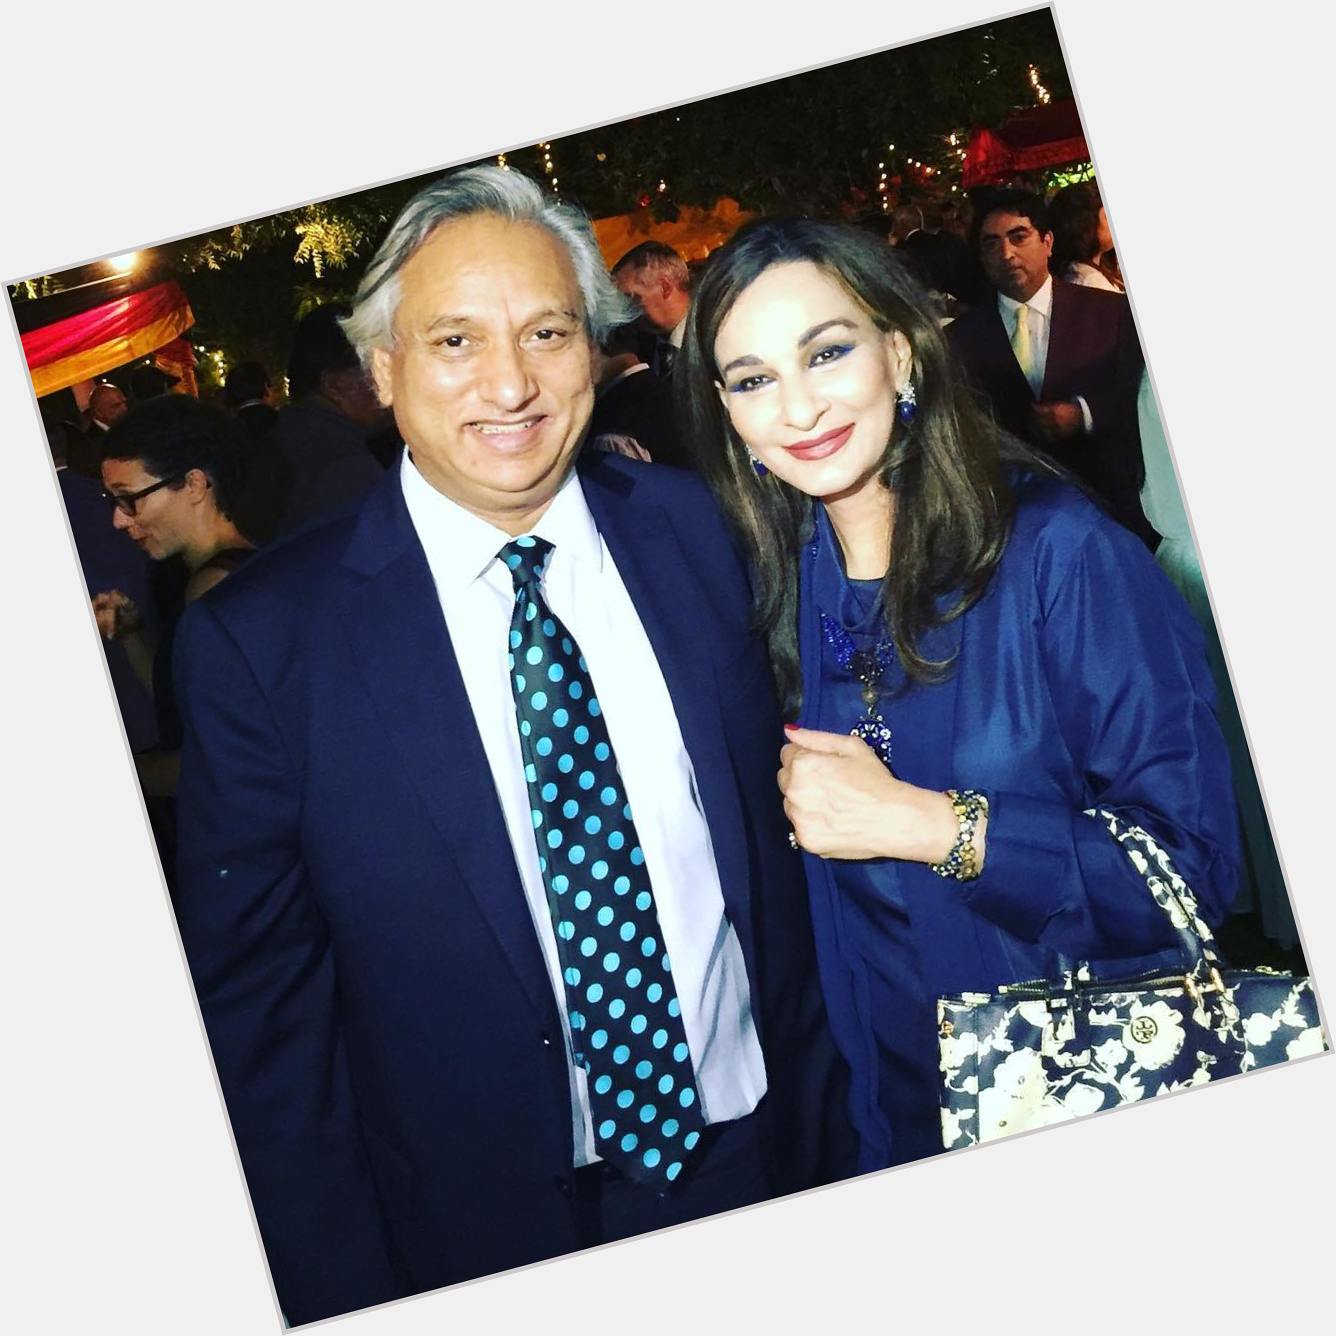 Happy birthday  Senator  Sherry Rehman.
May God bless you with happiness & prosperity 